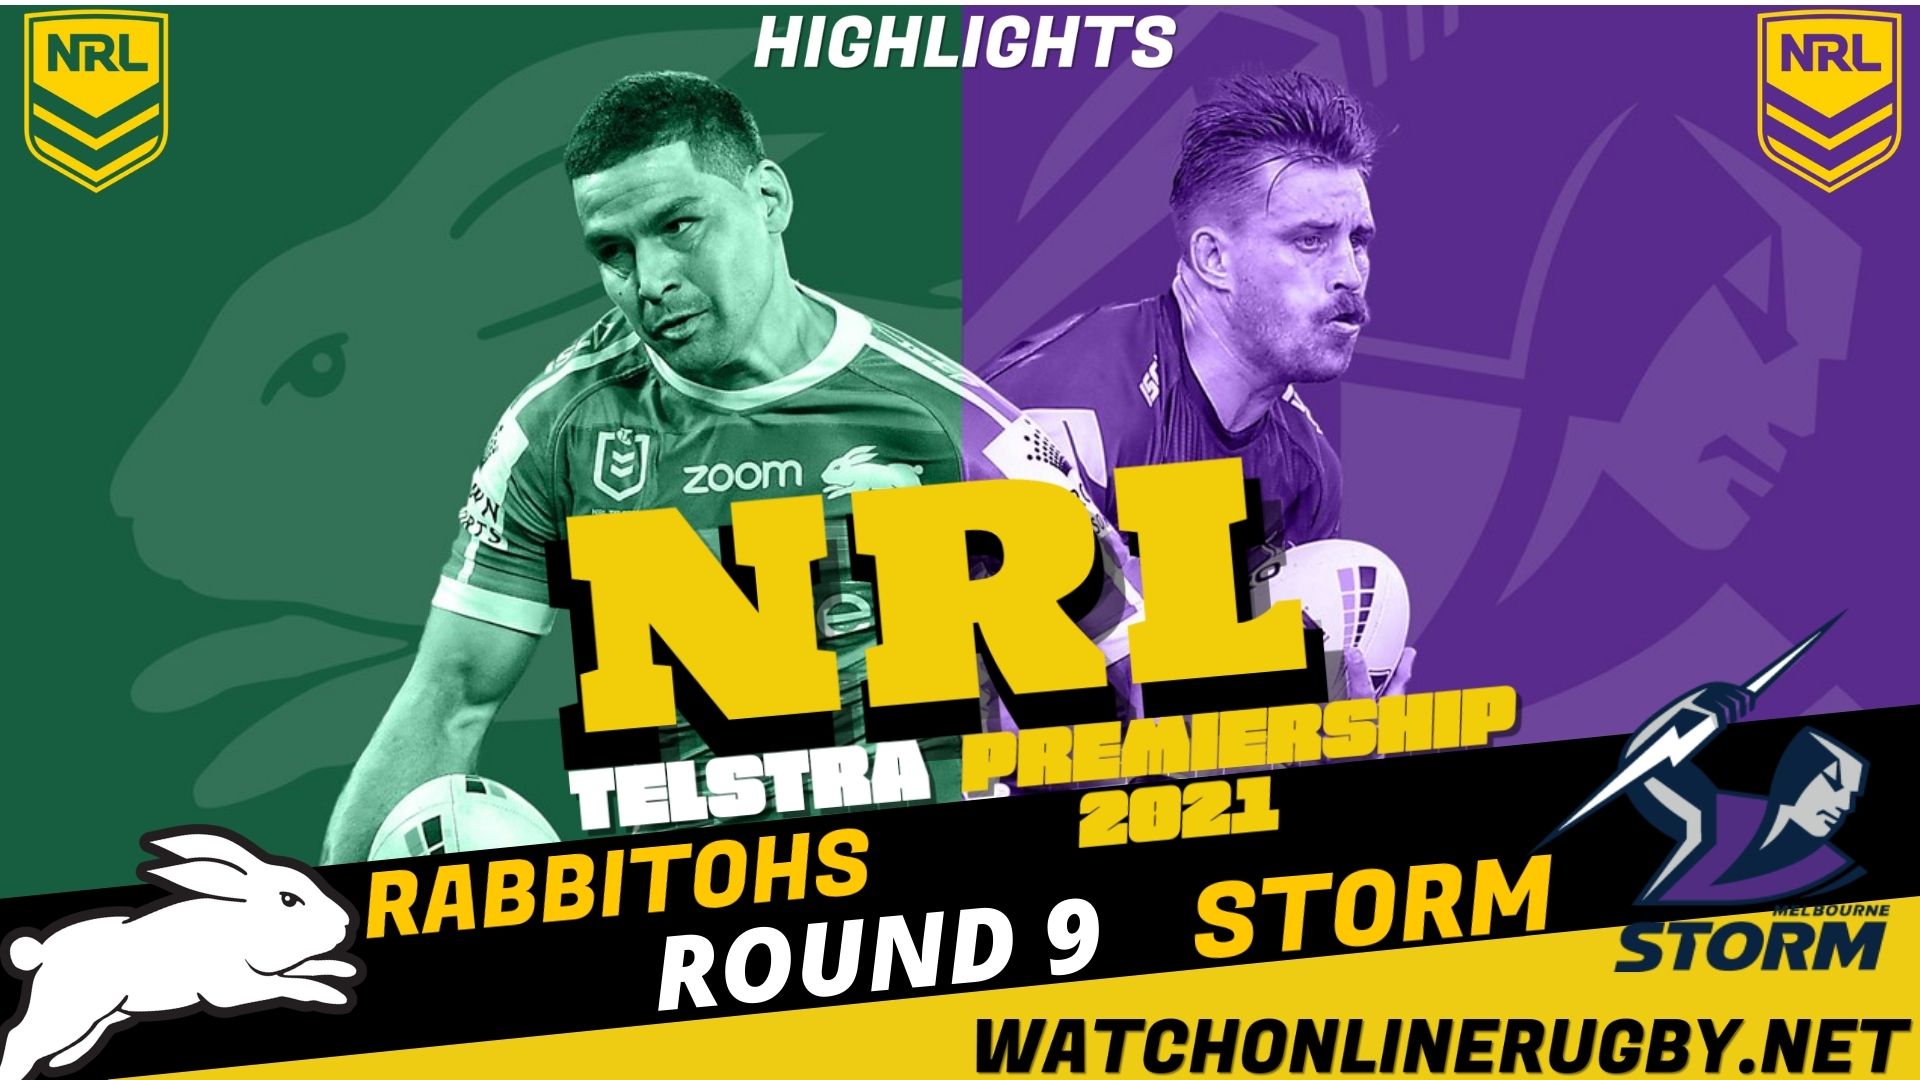 Rabbitohs Vs Storm Highlights RD 9 NRL Rugby